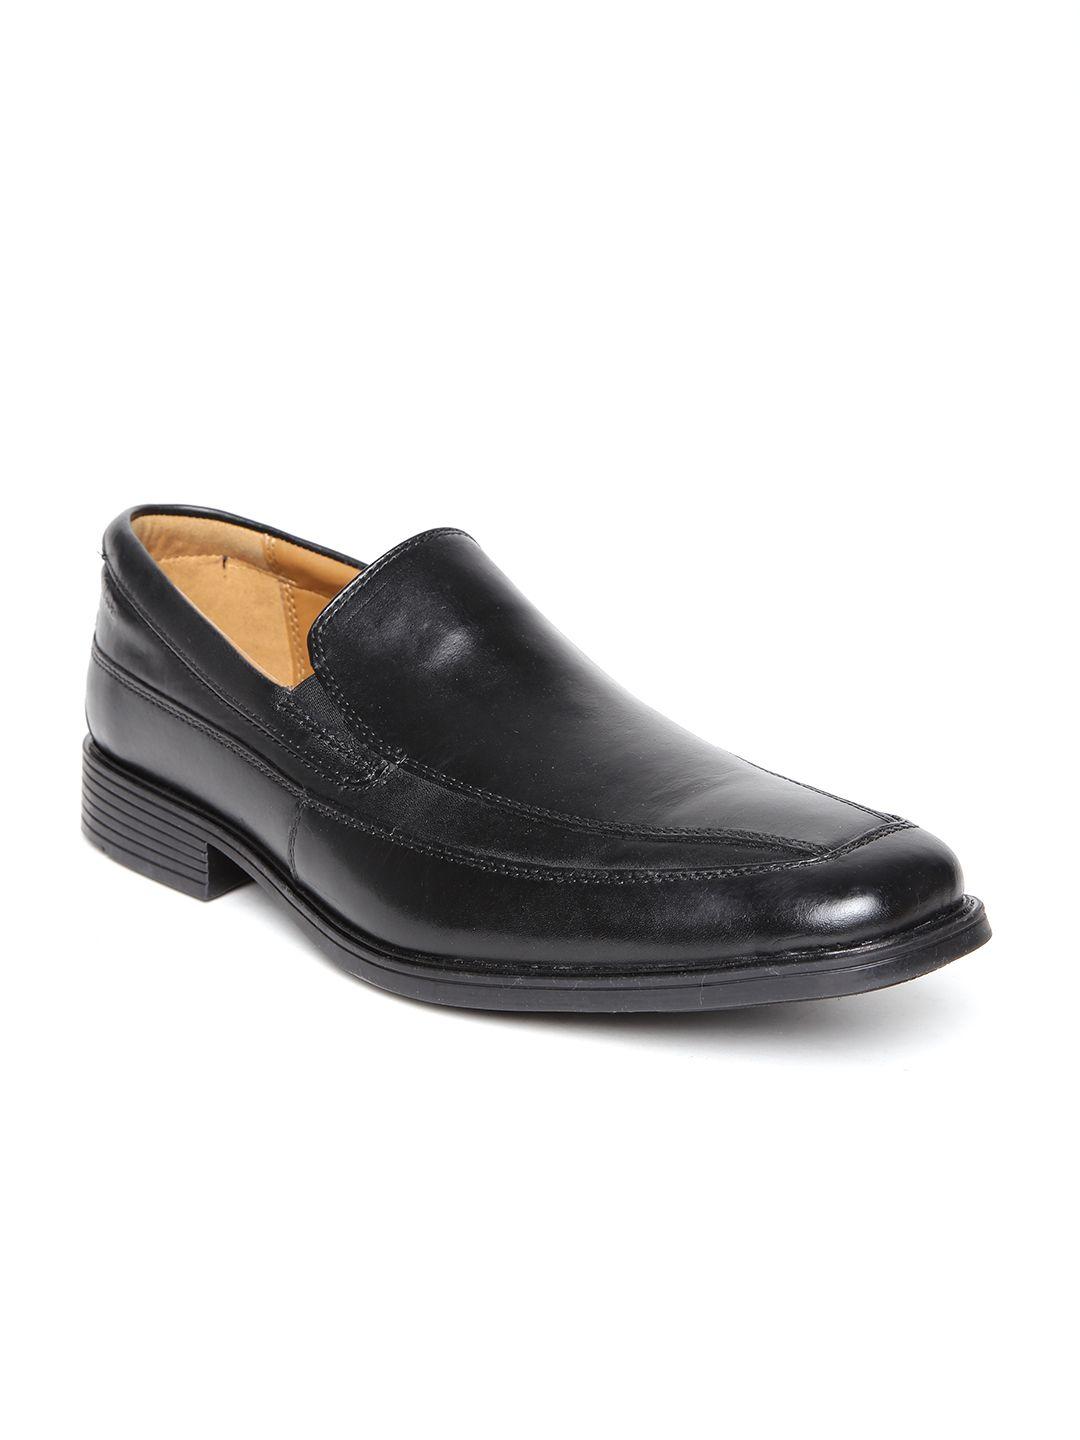 clarks men black leather semiformal shoes